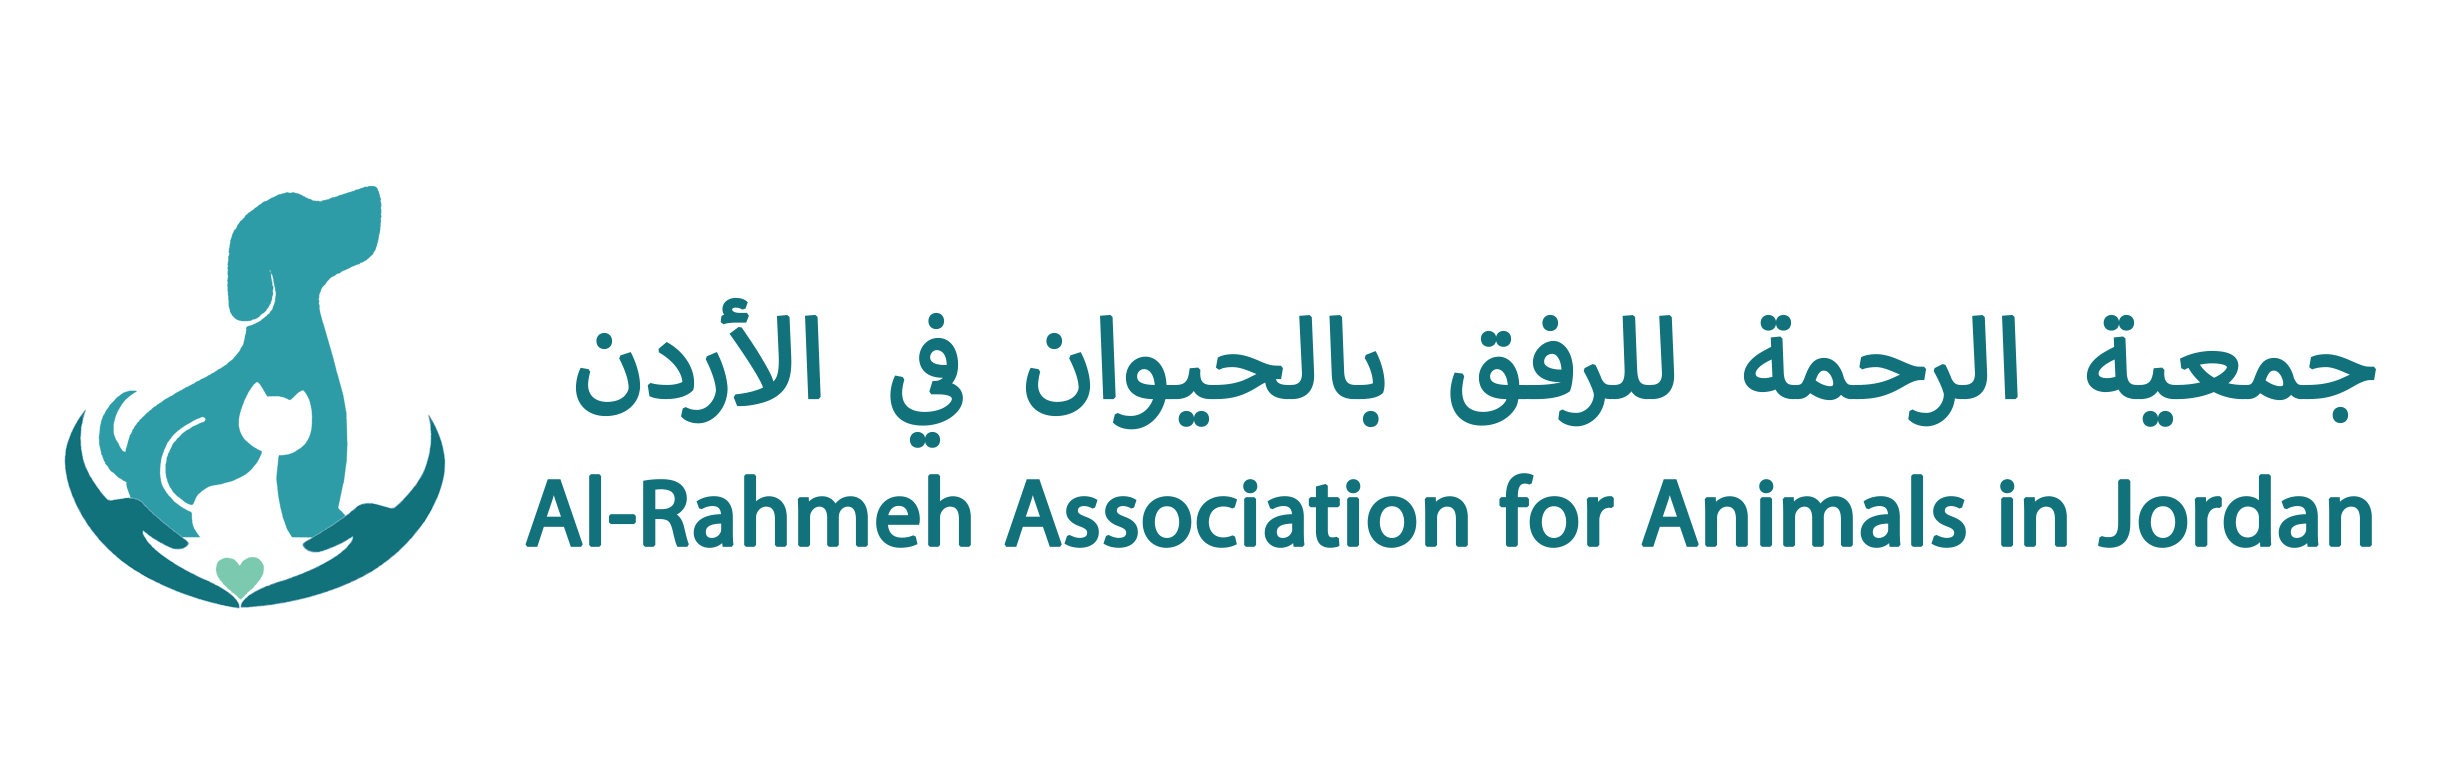 Al-Rahmeh Association